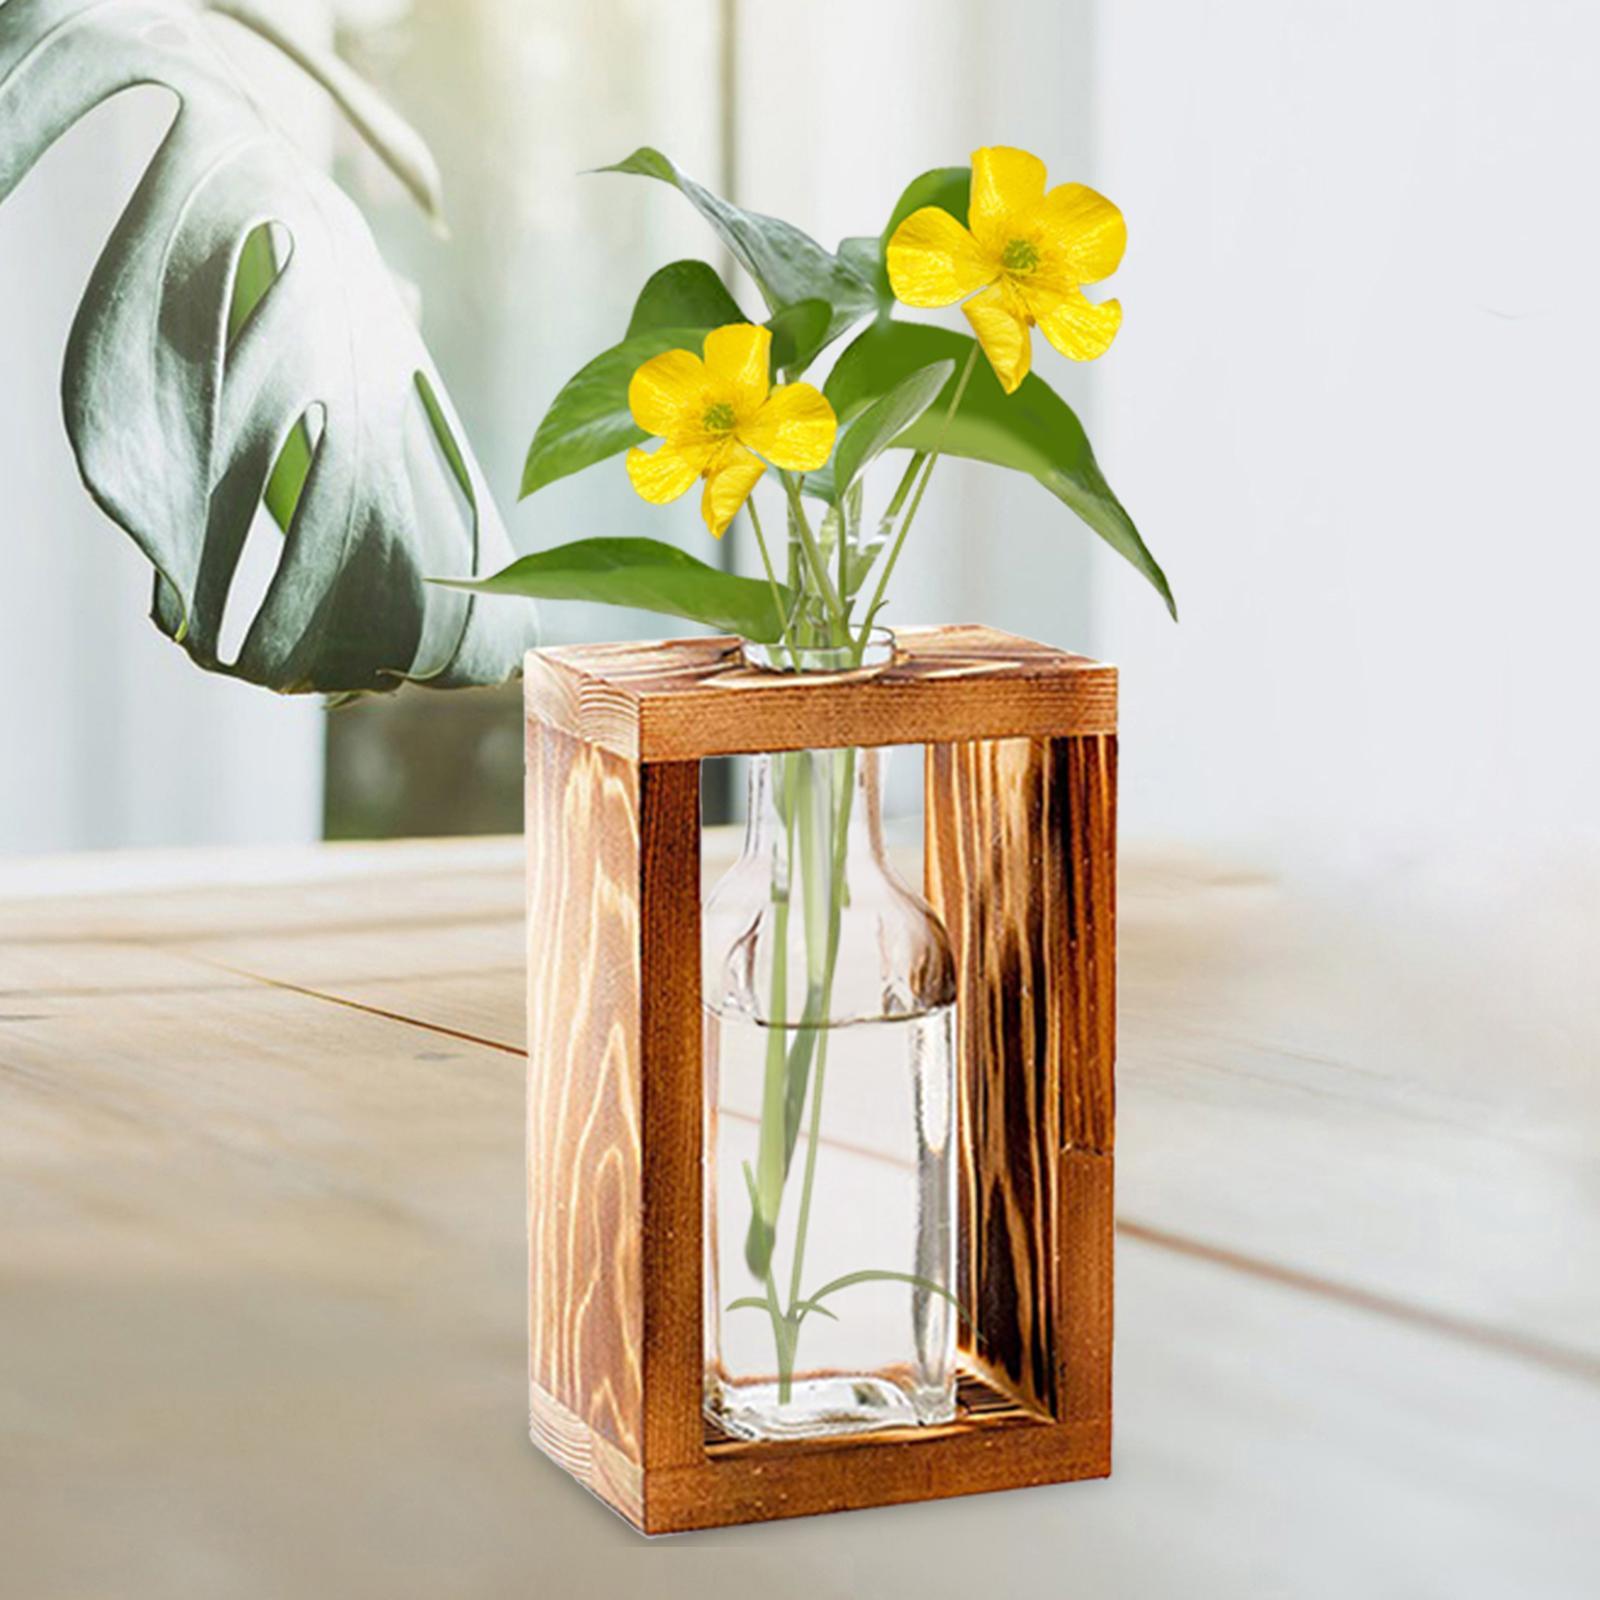 Plant Vase home Pot Garden Decor Desktop Container Holder